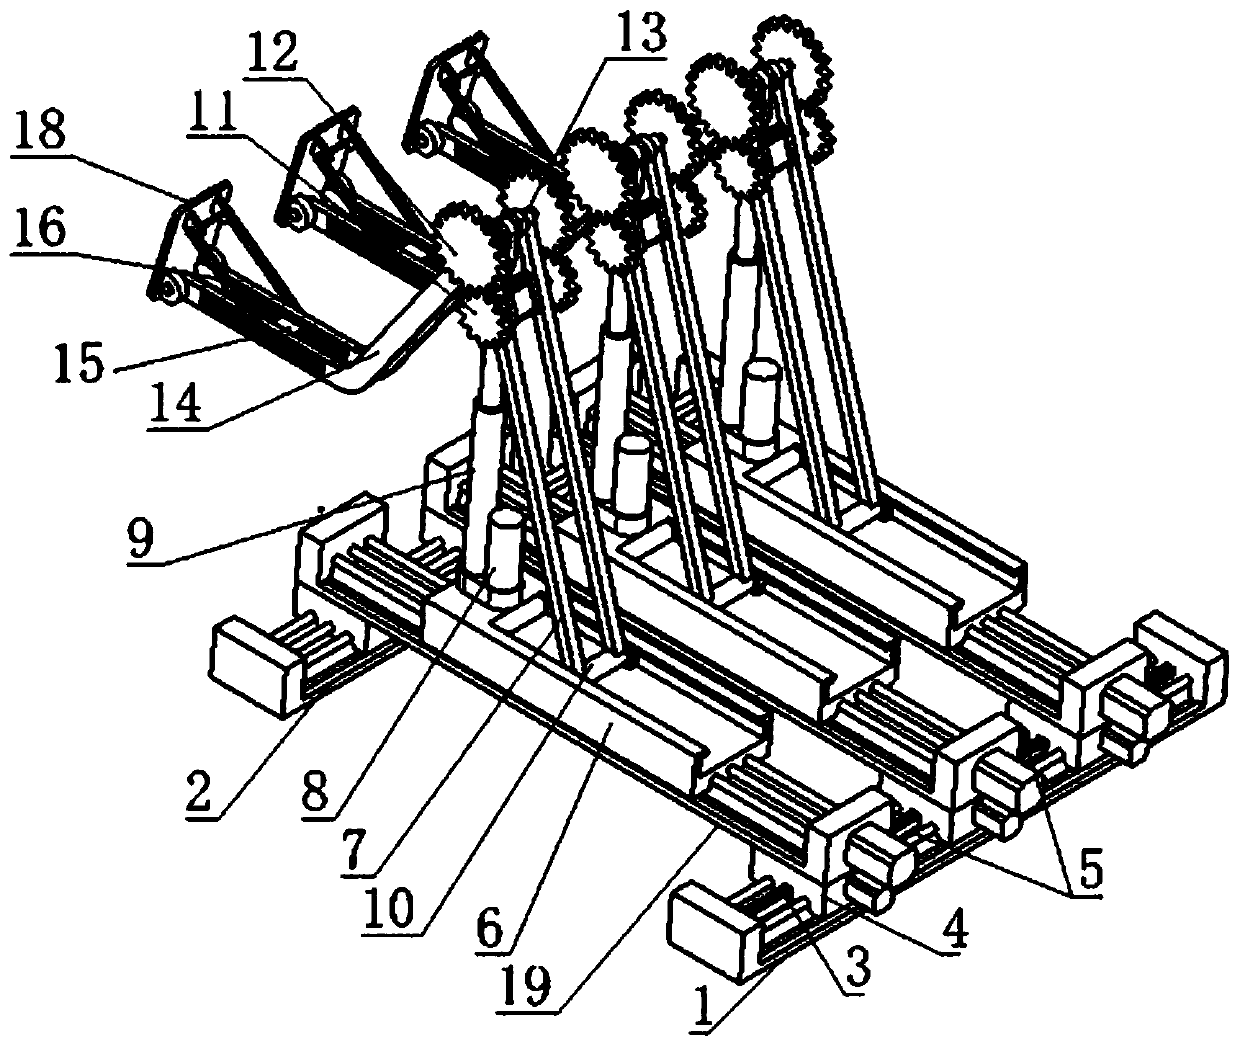 Three-pedal adjusting mechanism based on leg surface electromyographic signals